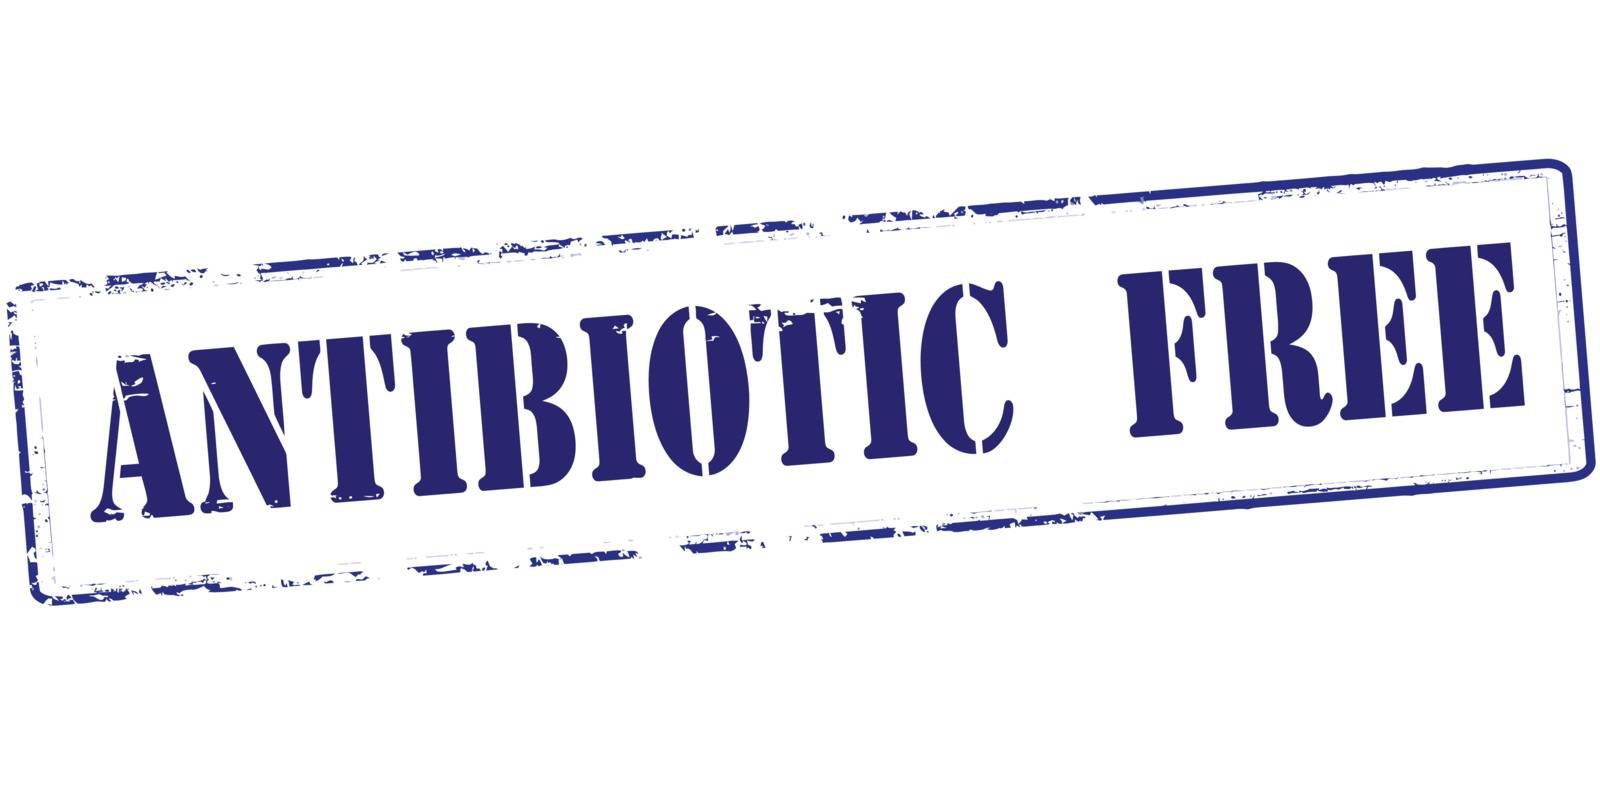 Antibiotic free by carmenbobo